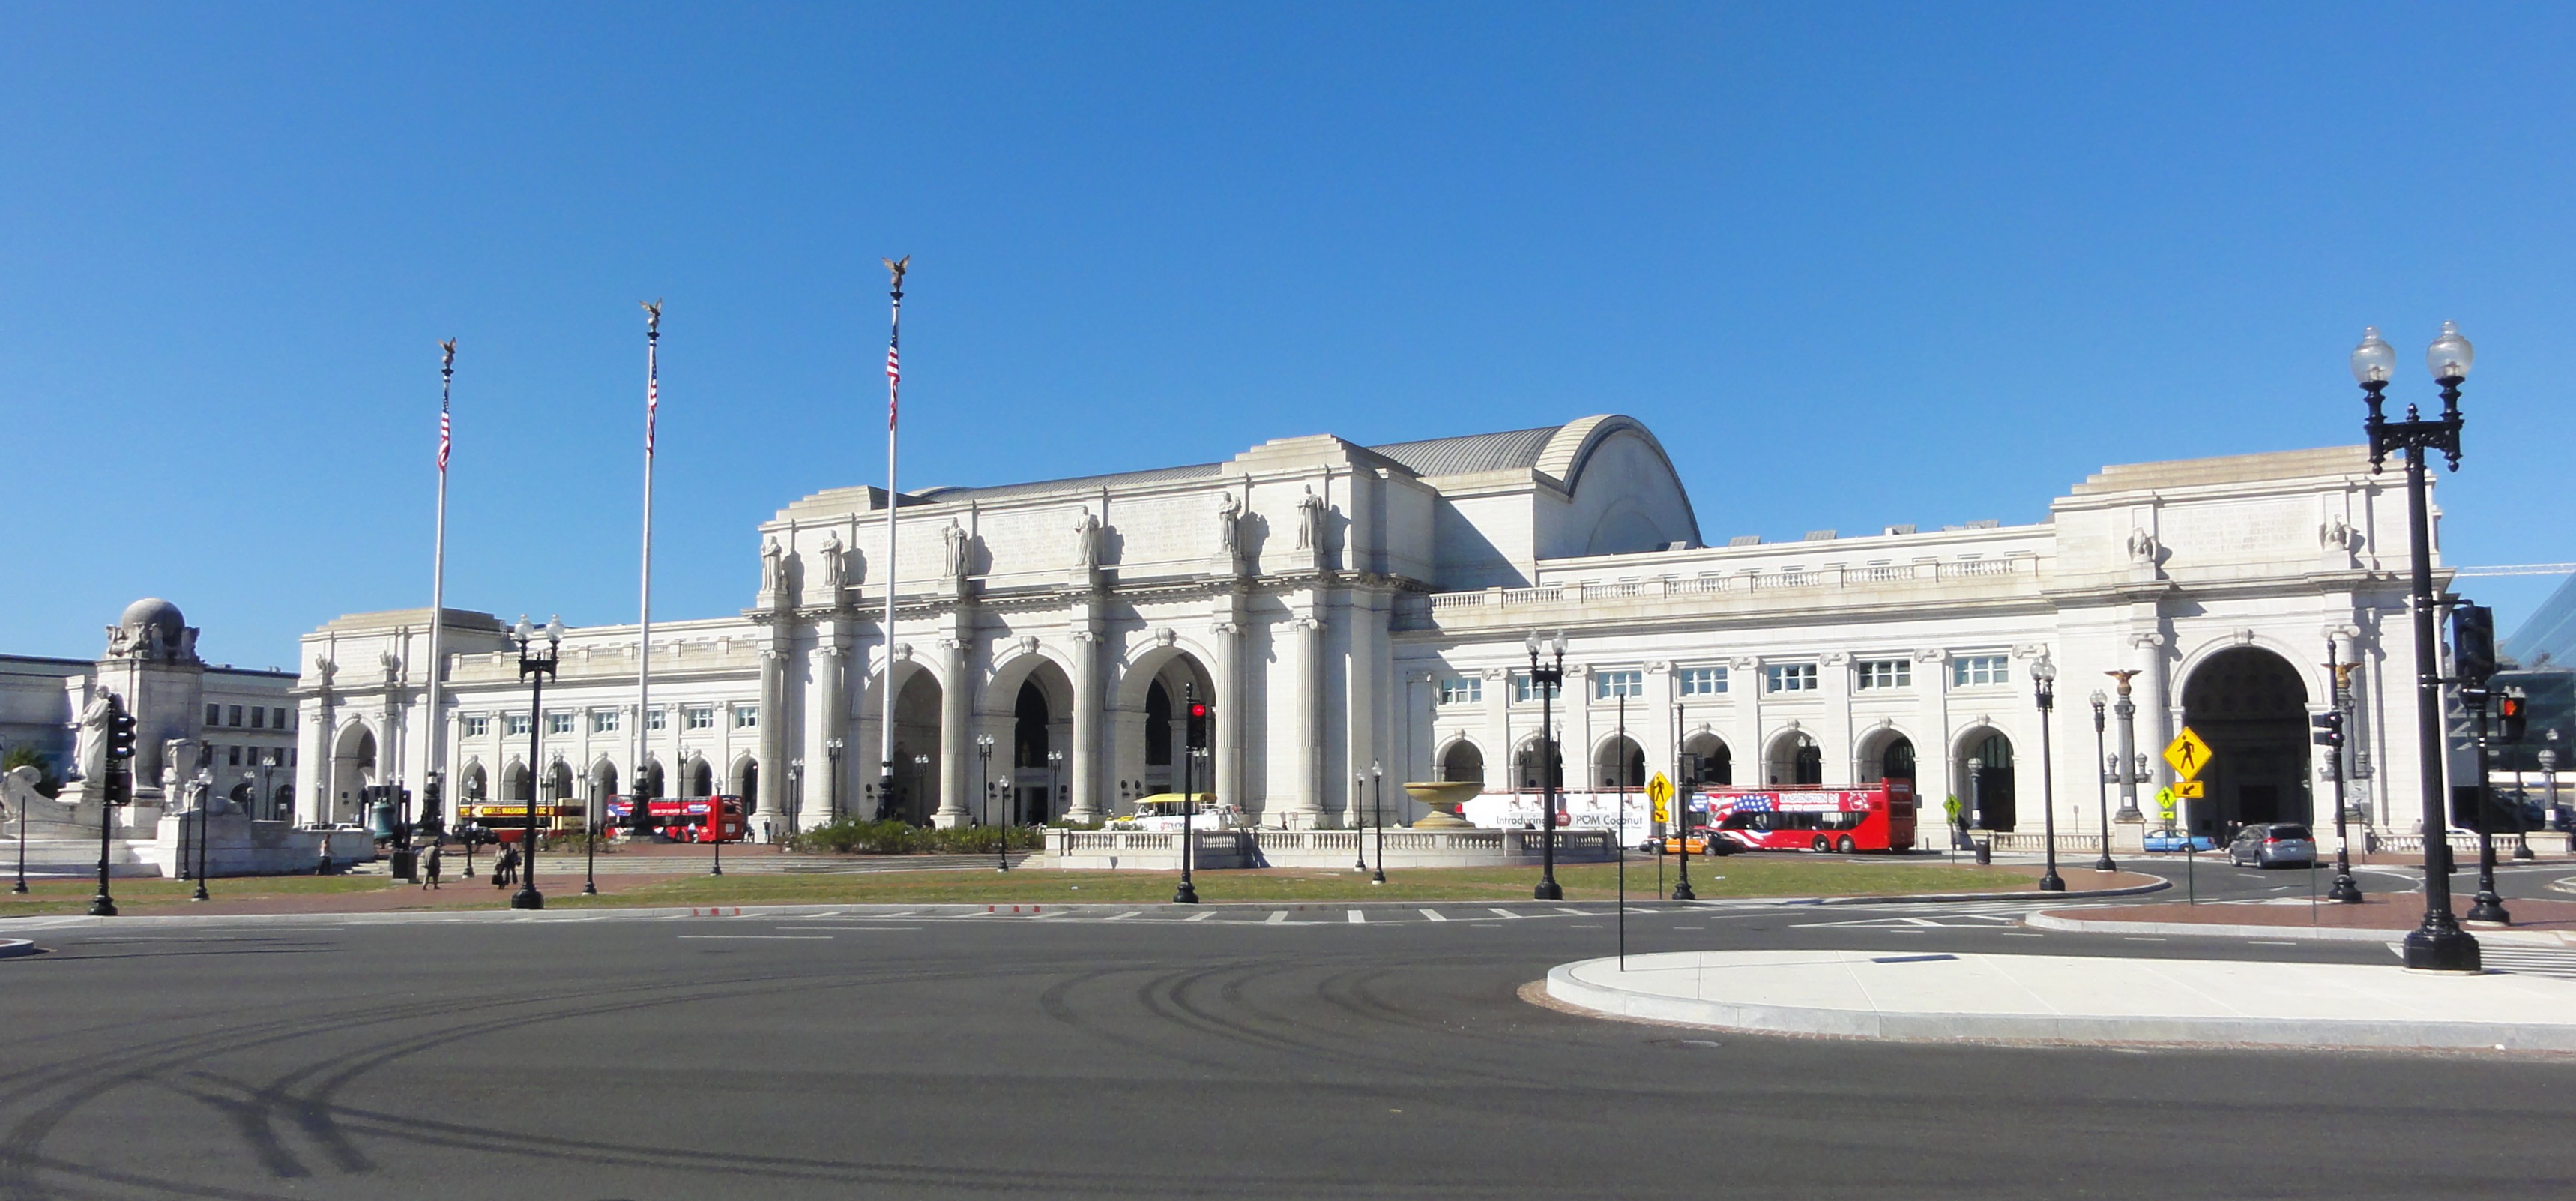 File:Union Station Washington DC 24 Sep 2013.jpg - Wikimedia Commons